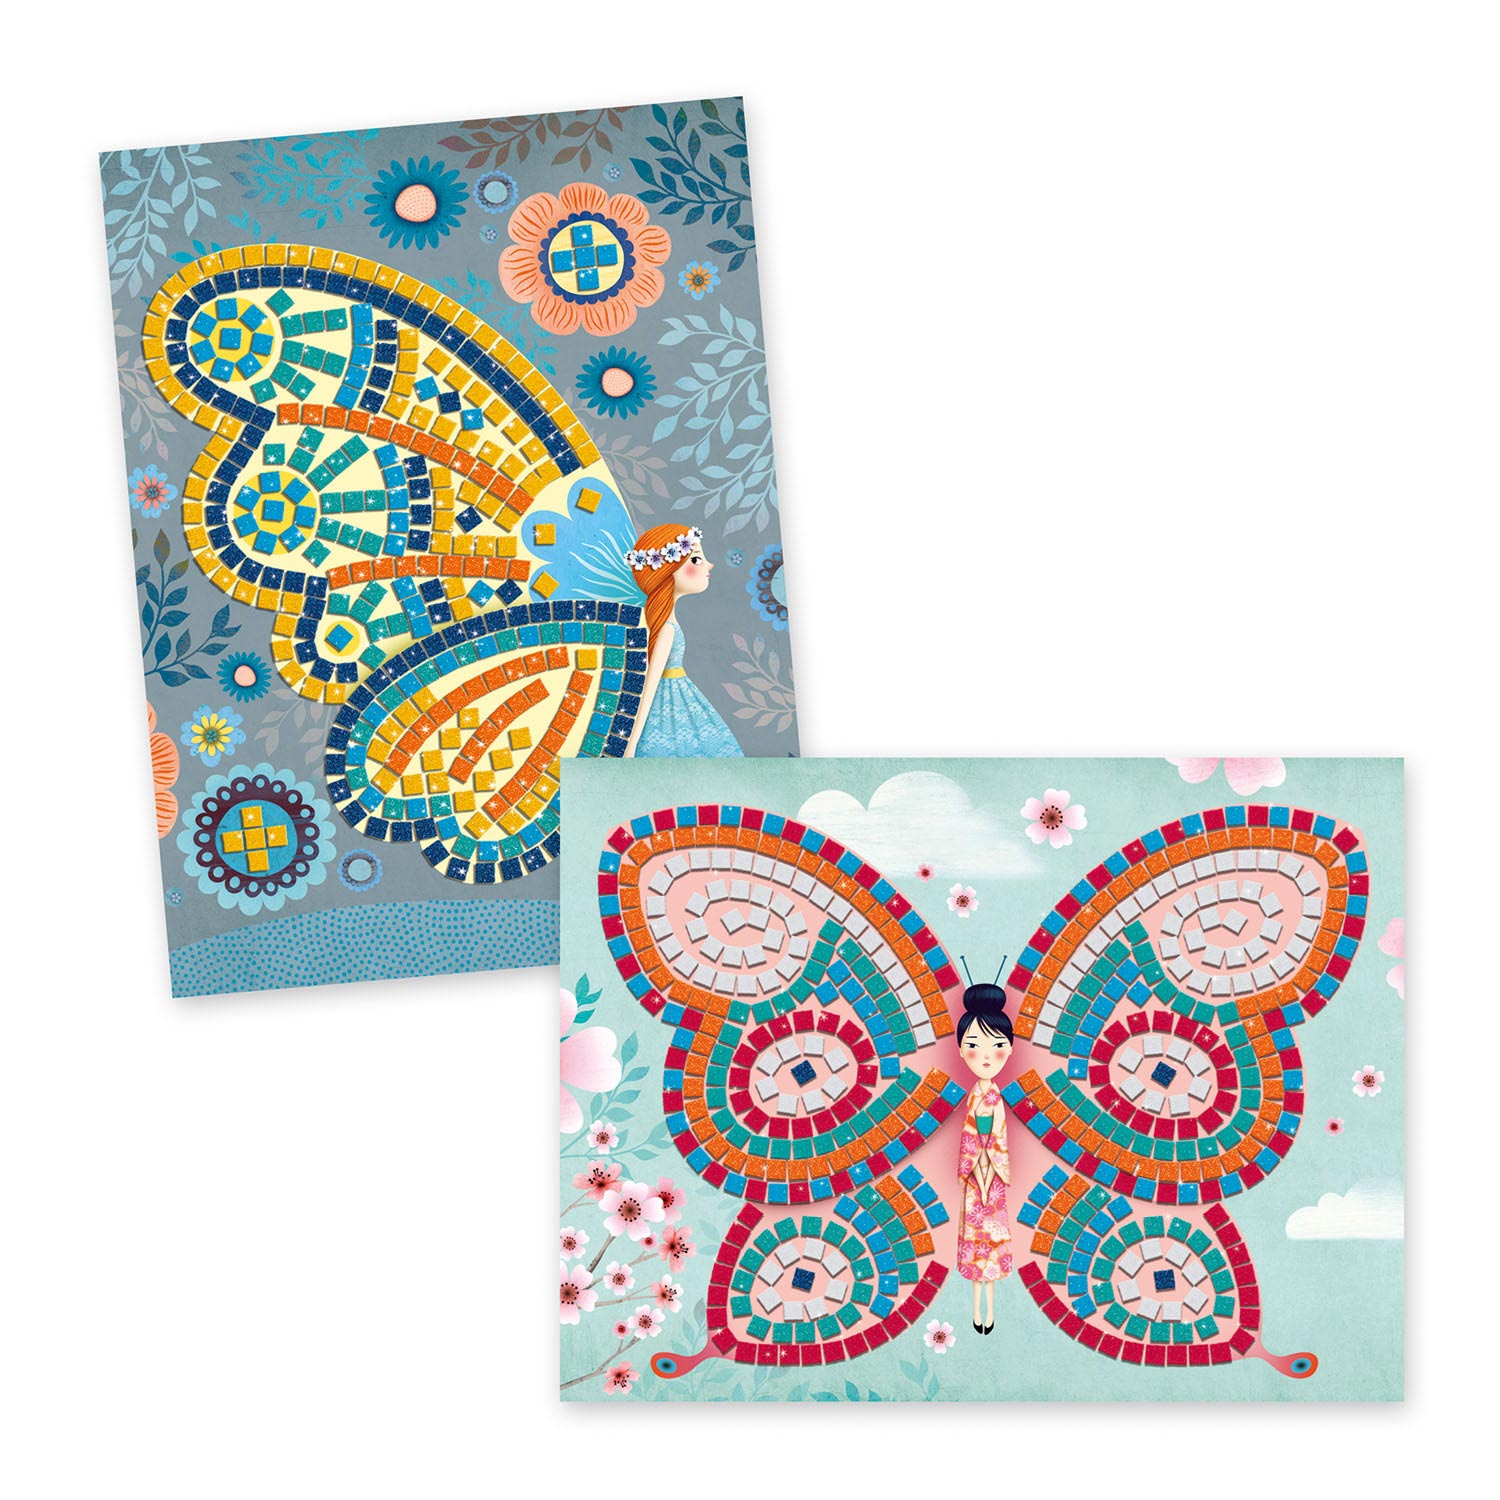 Djeco Mosaik-Schmetterlinge